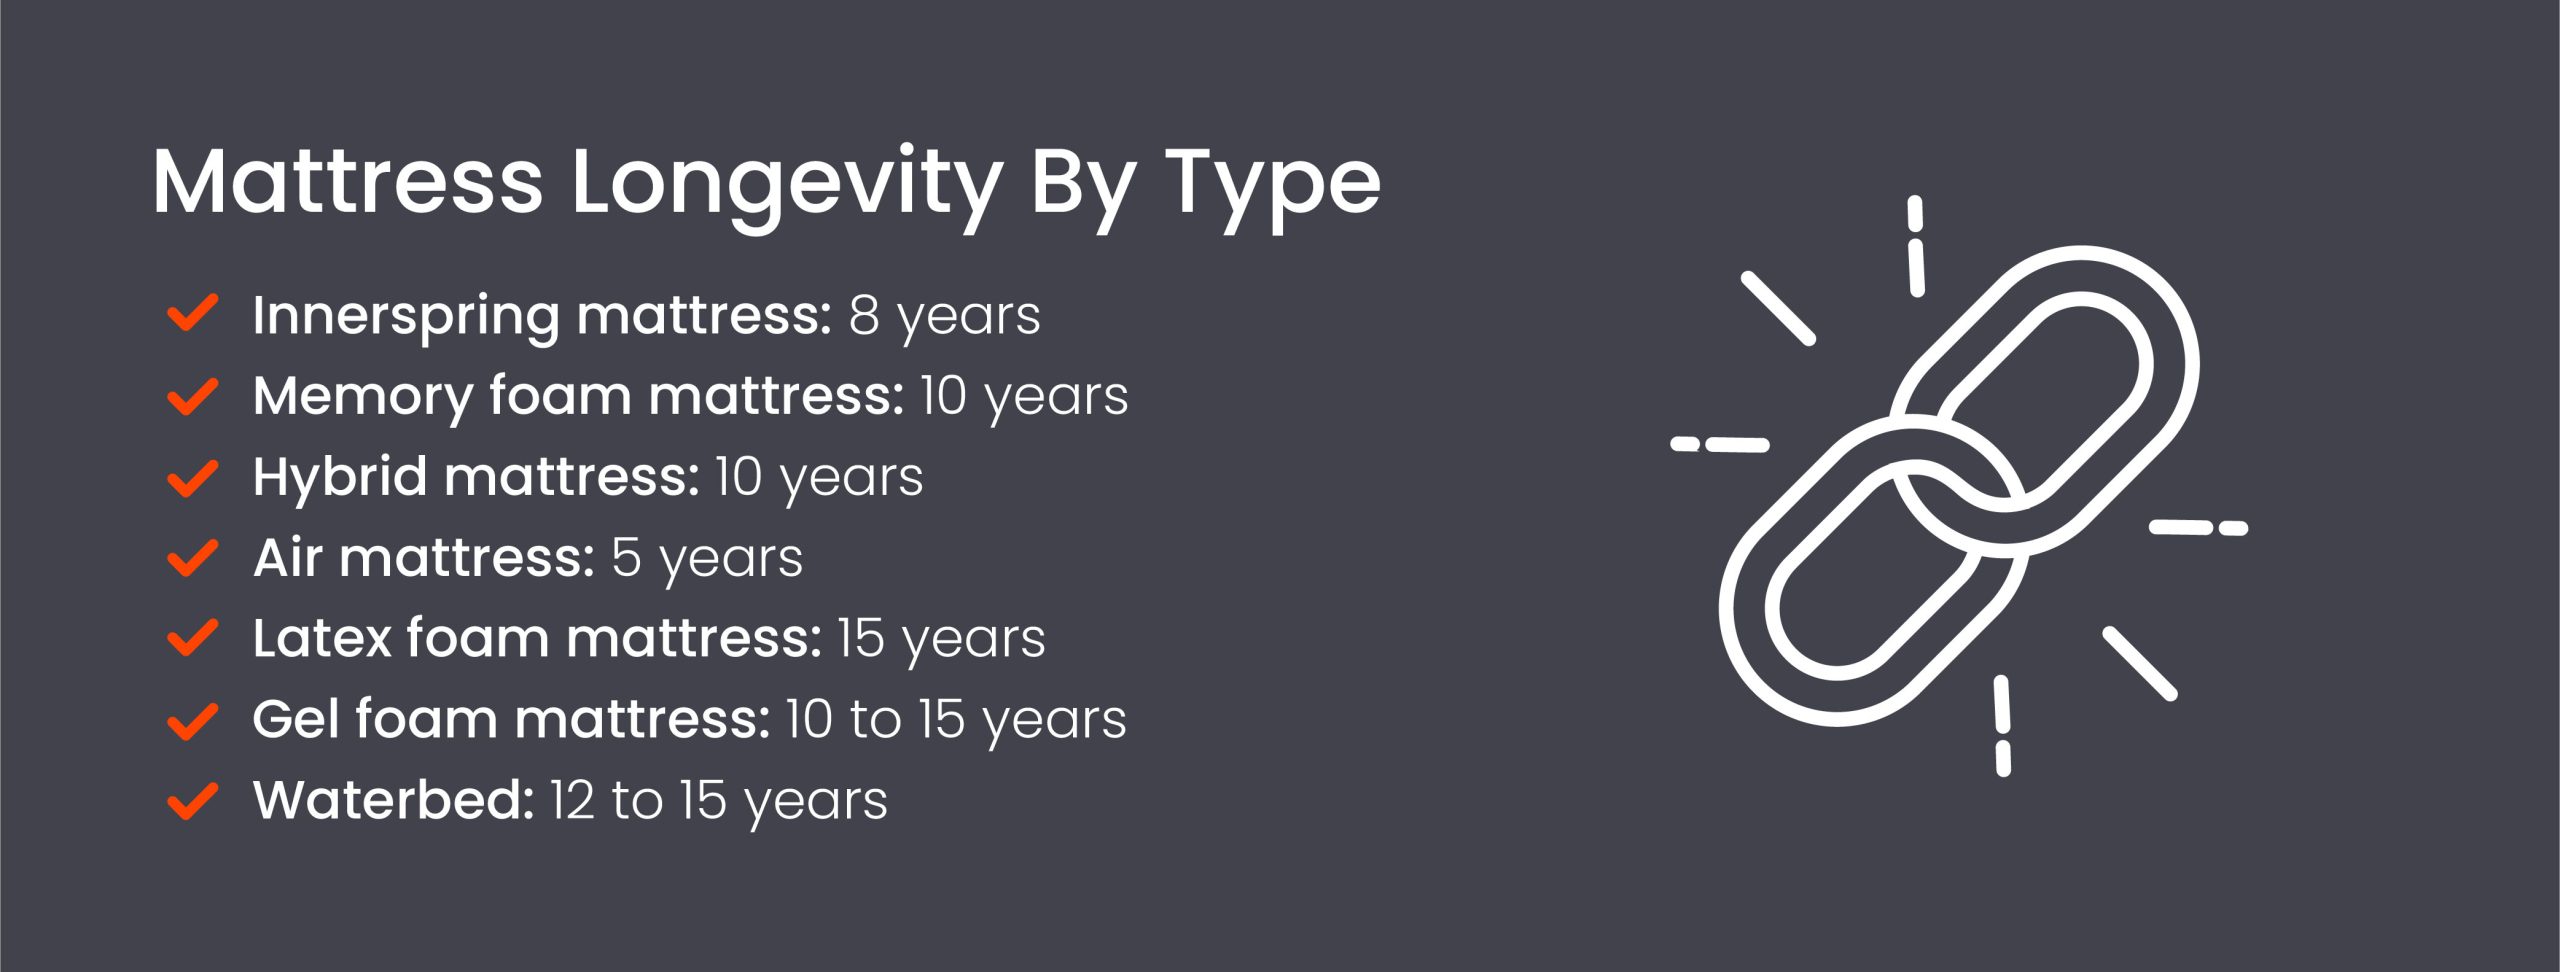 Mattress longevity by type